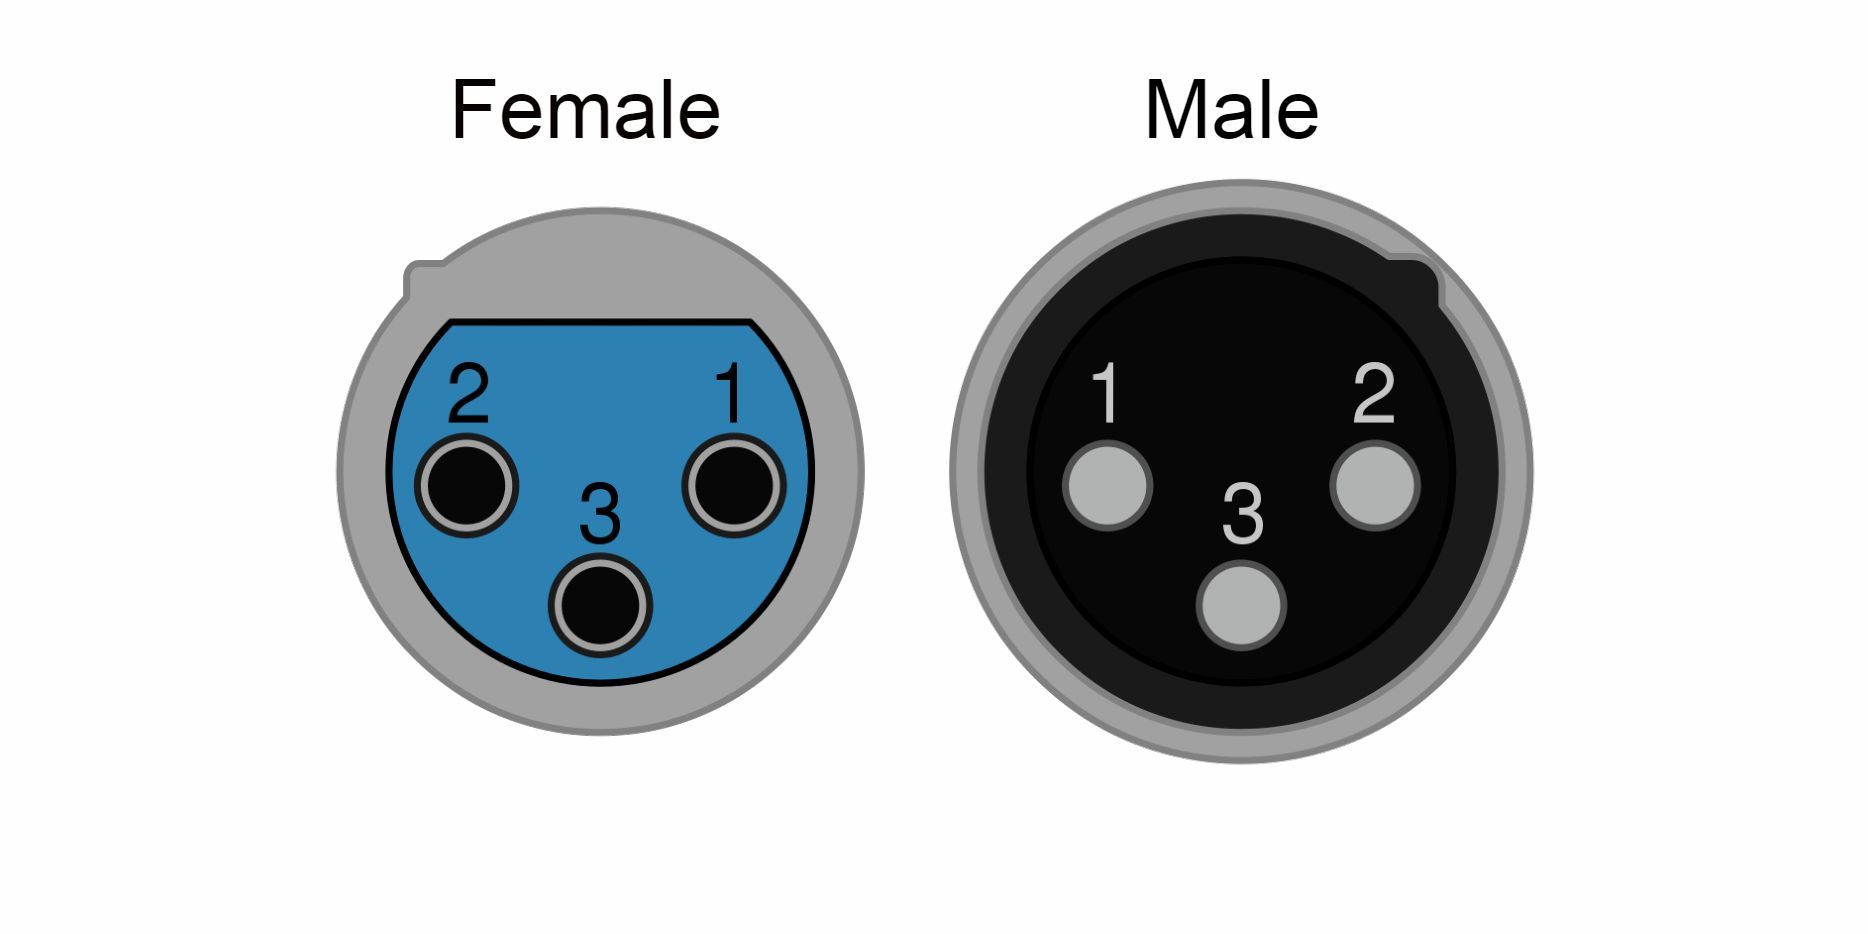 Male and female XLR pinout diagram